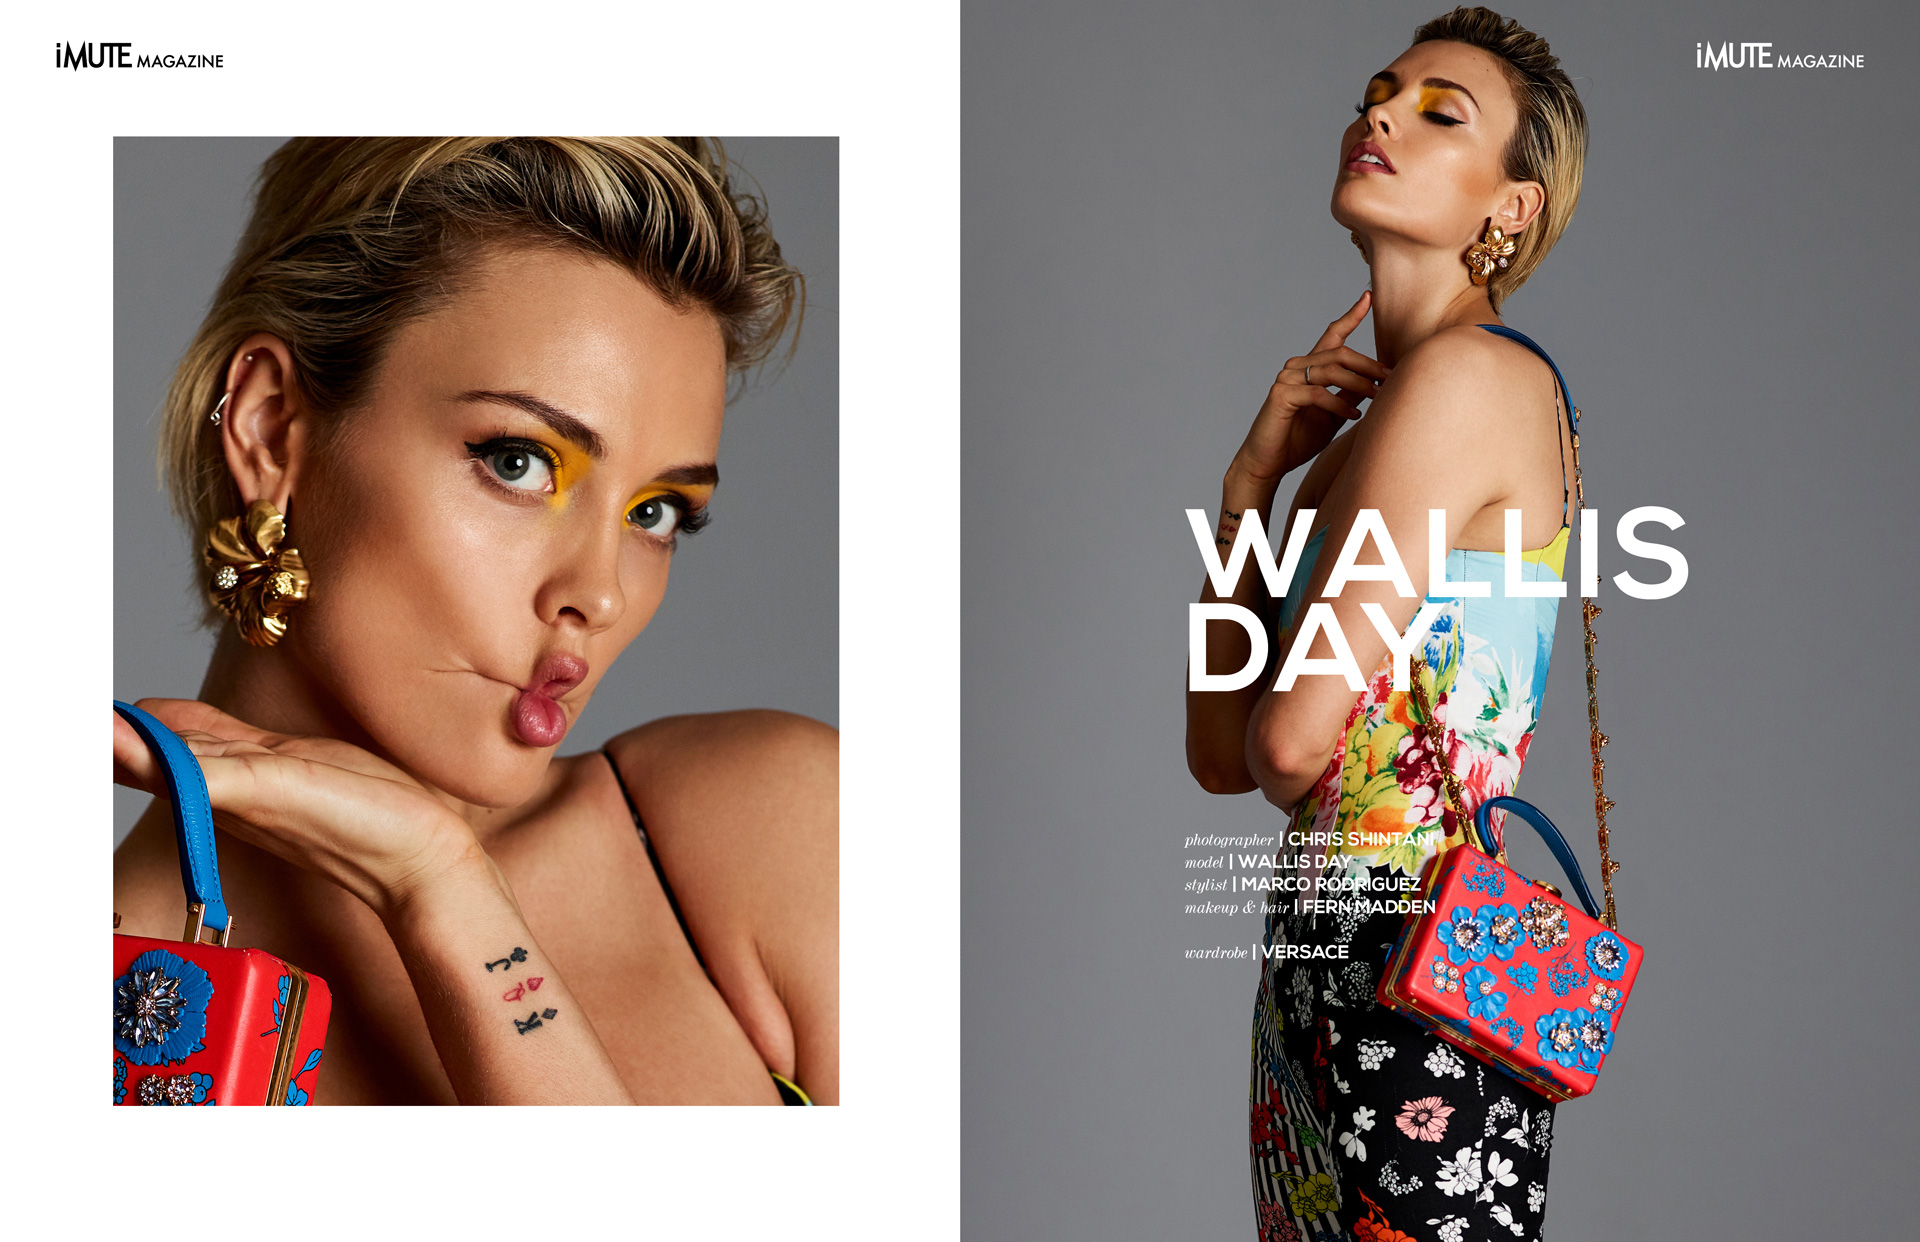 Wallis Day feature editorial for iMute Magazine PHOTOGRAPHER | Chris Shintani Actress | Wallis Day STYLIST | Marco Rodriguez MAKEUP & HAIR | Fern Madden WARDROBE | Versace